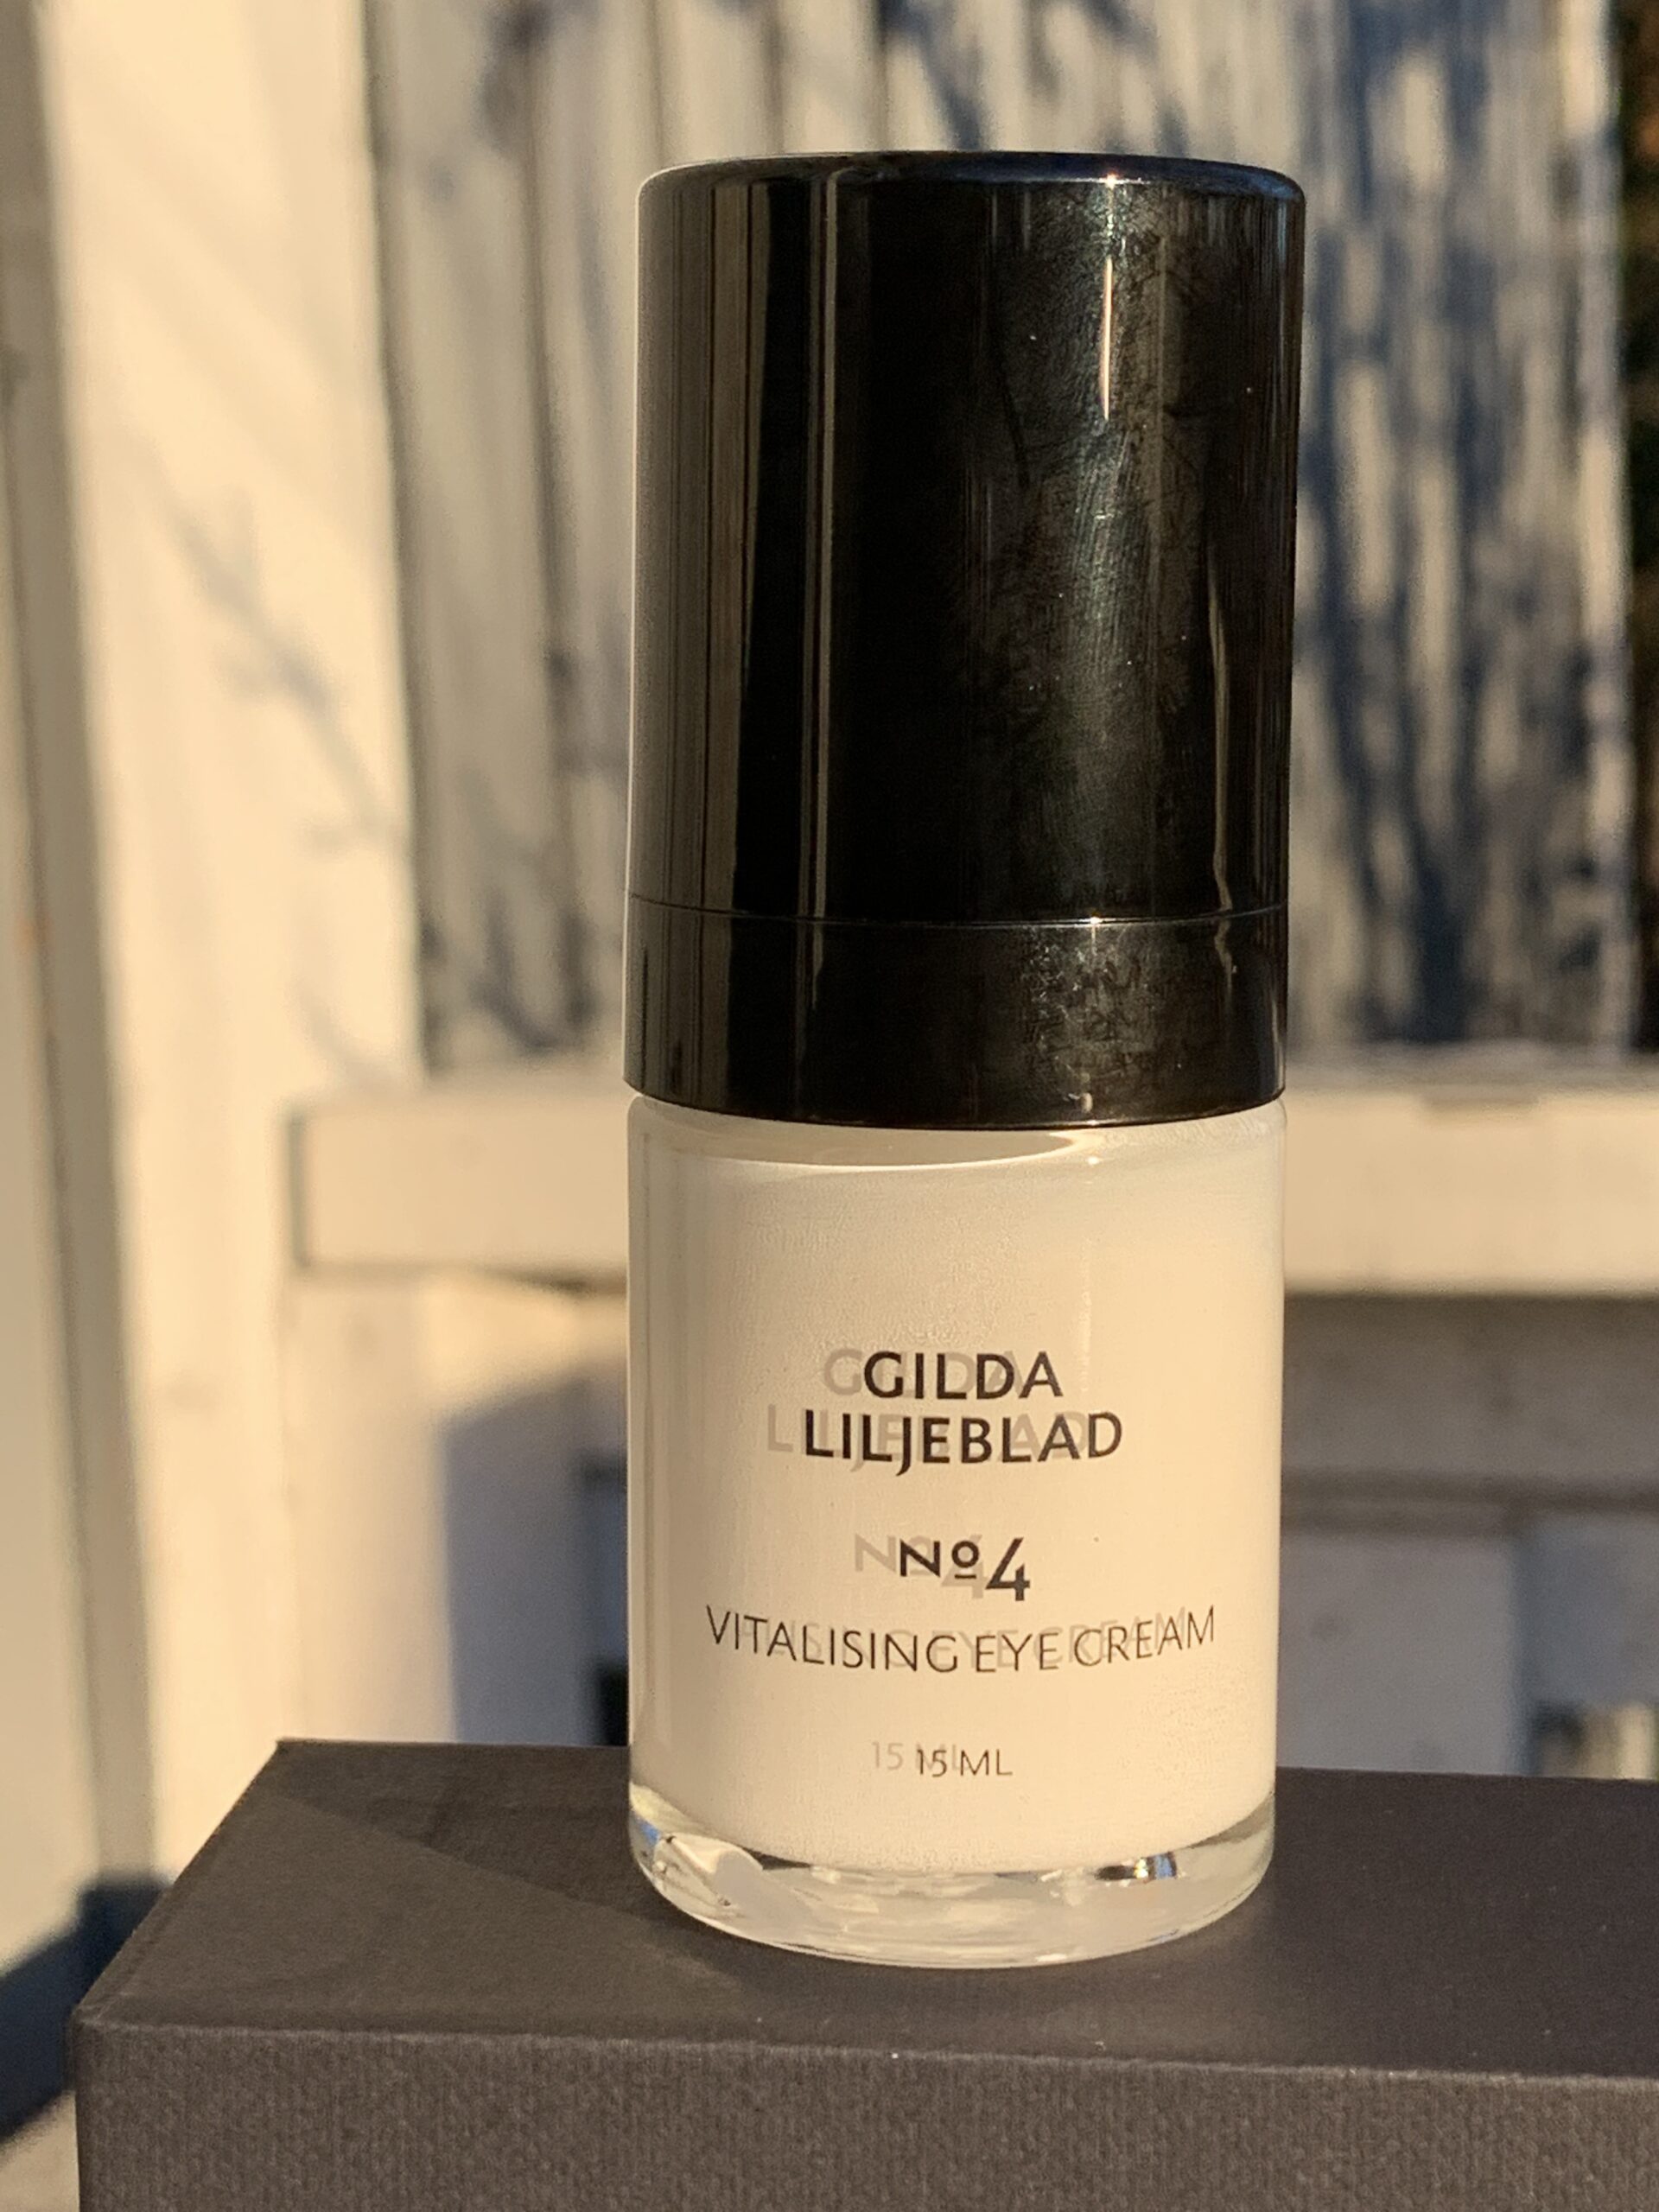 Gilda Liljeblad vitalising eye cream